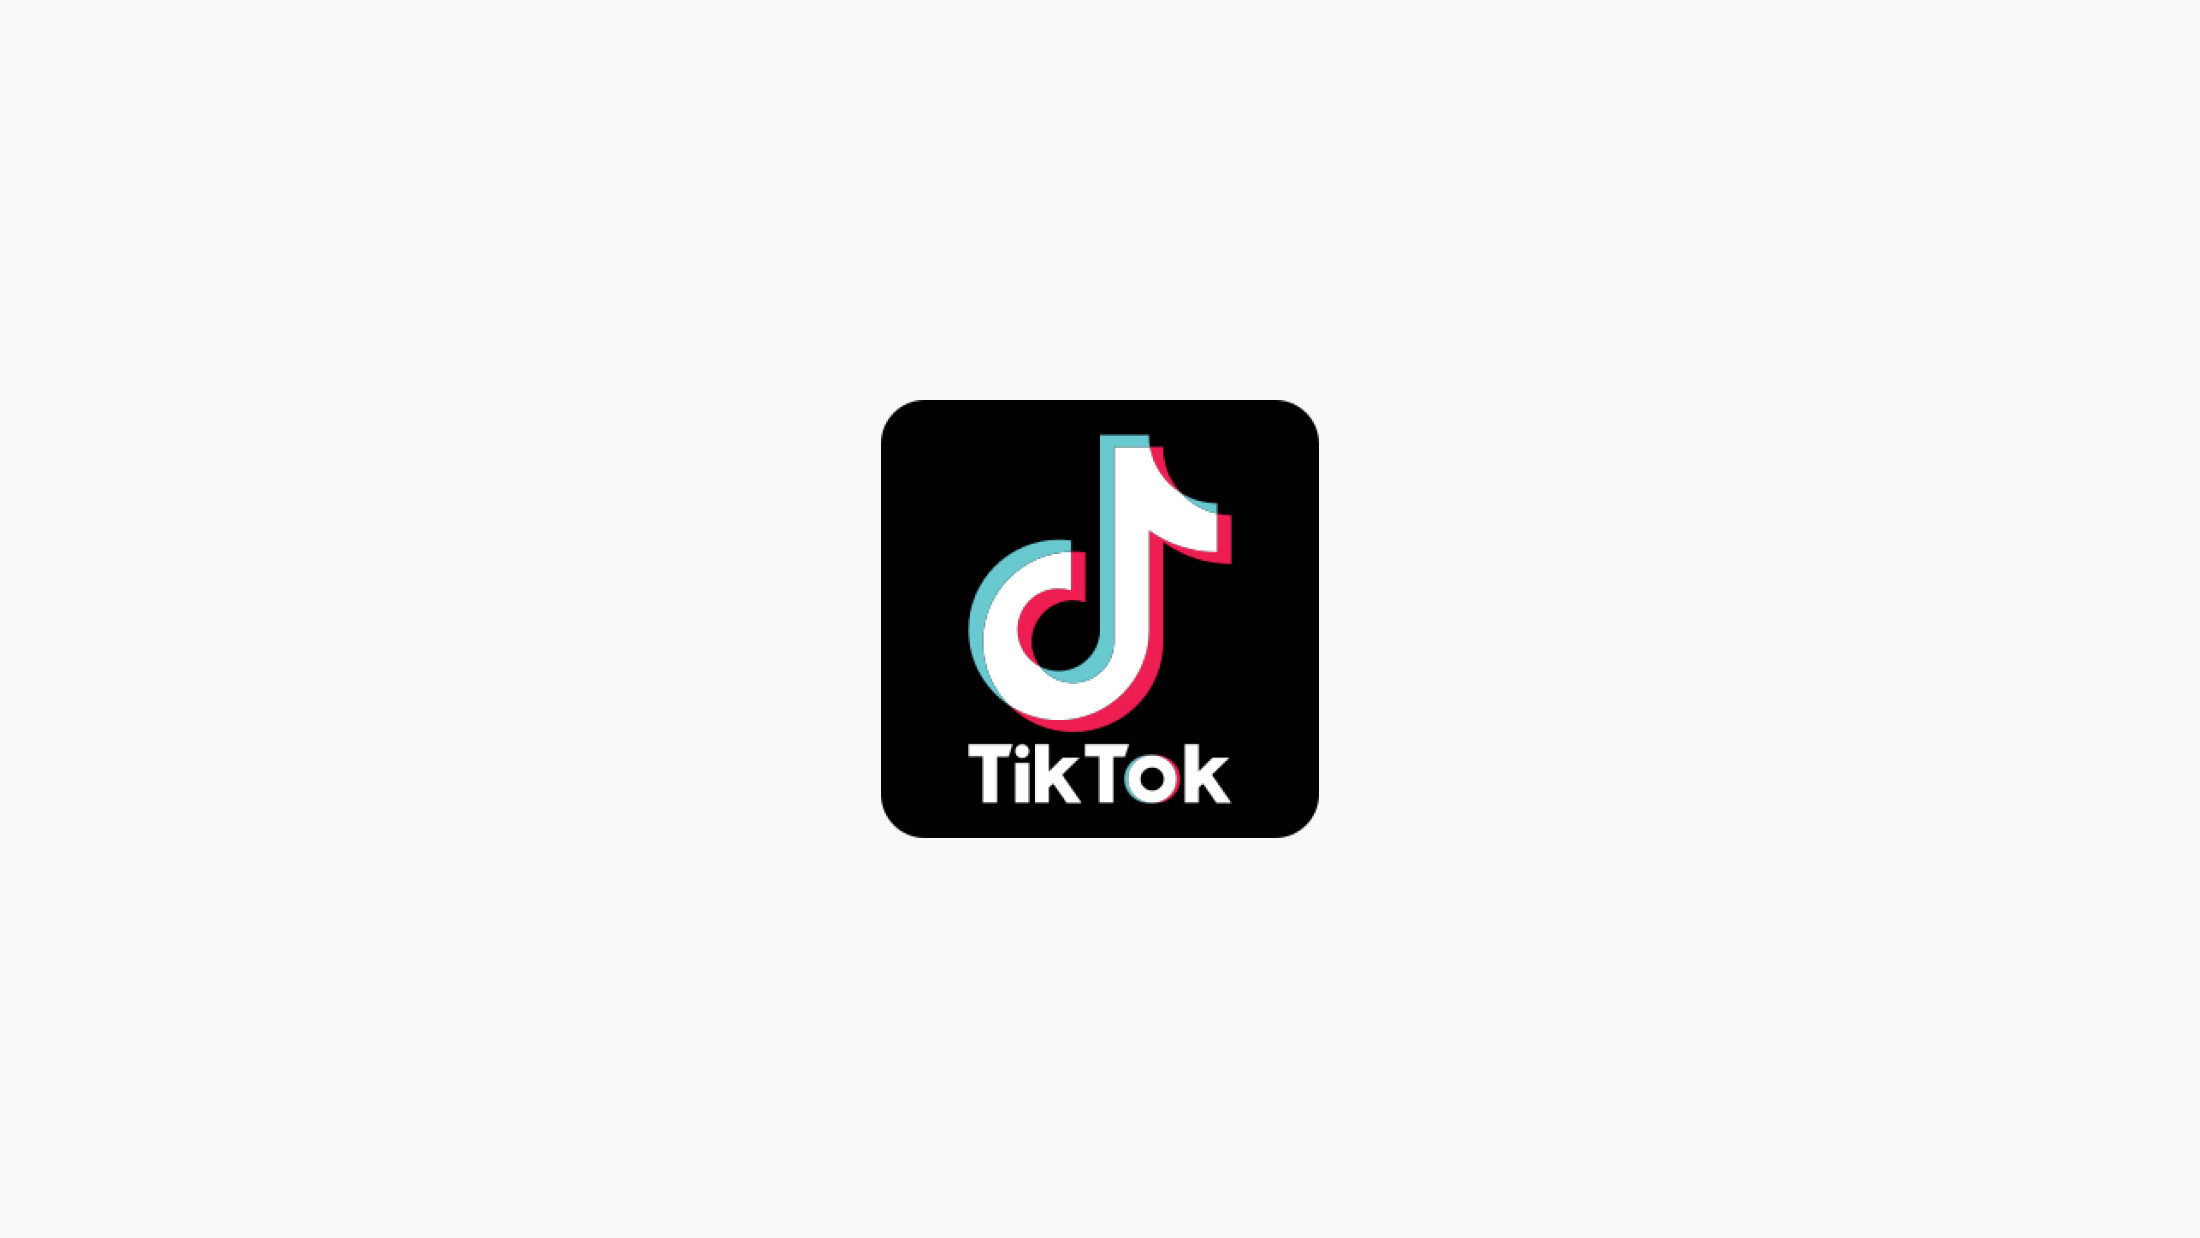 The 20 Most Followed Accounts on TikTok